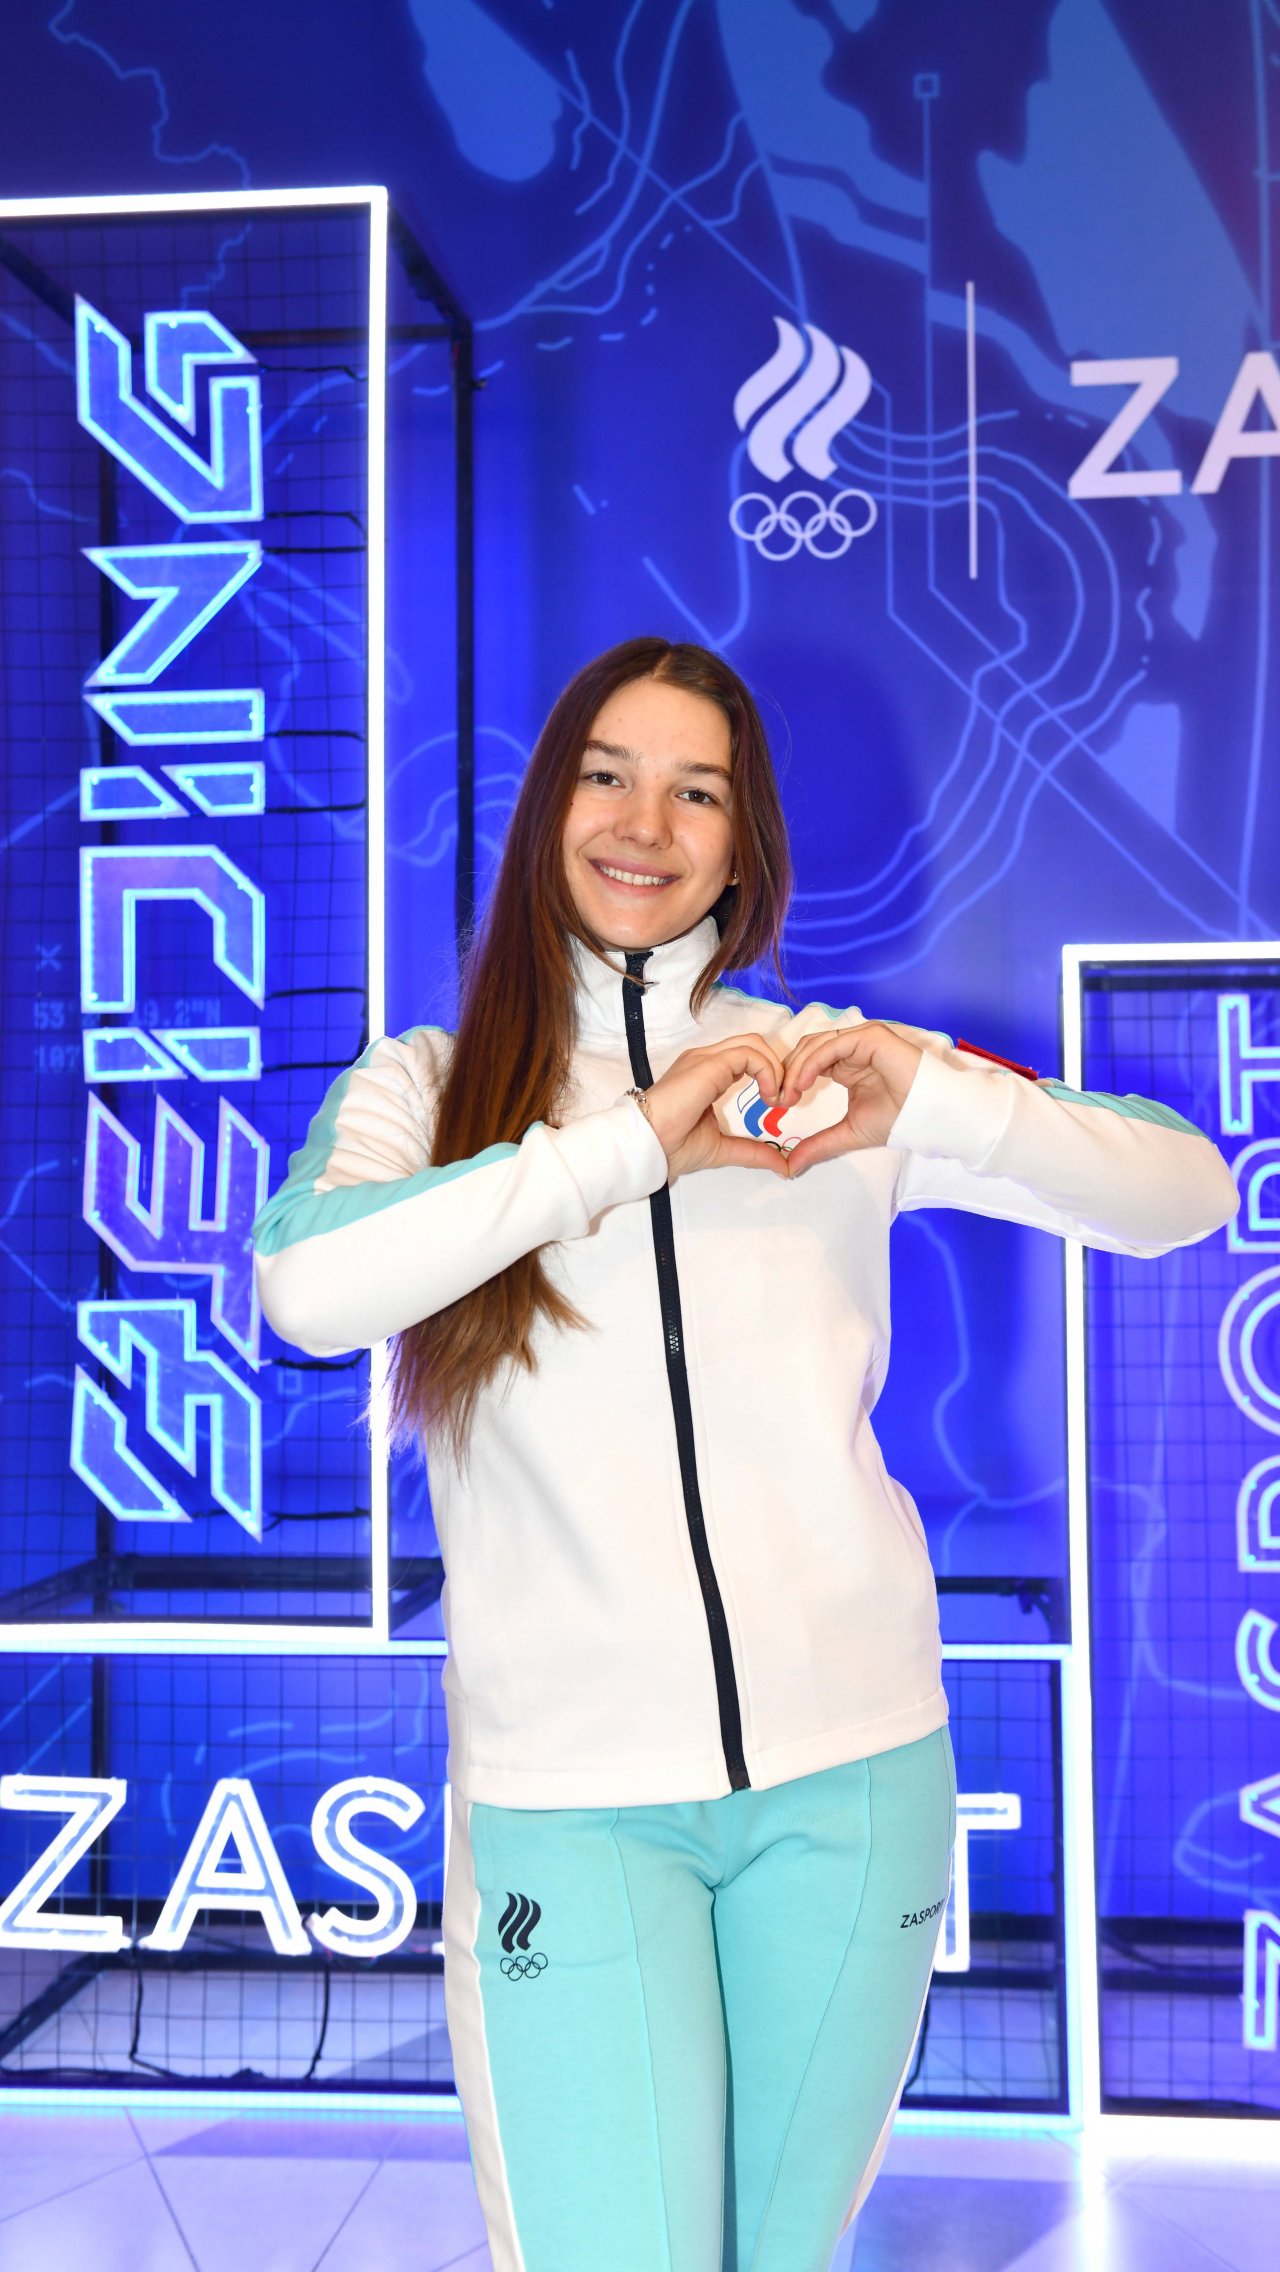 Полина Смоленцова — дебютантка Олимпийских игр